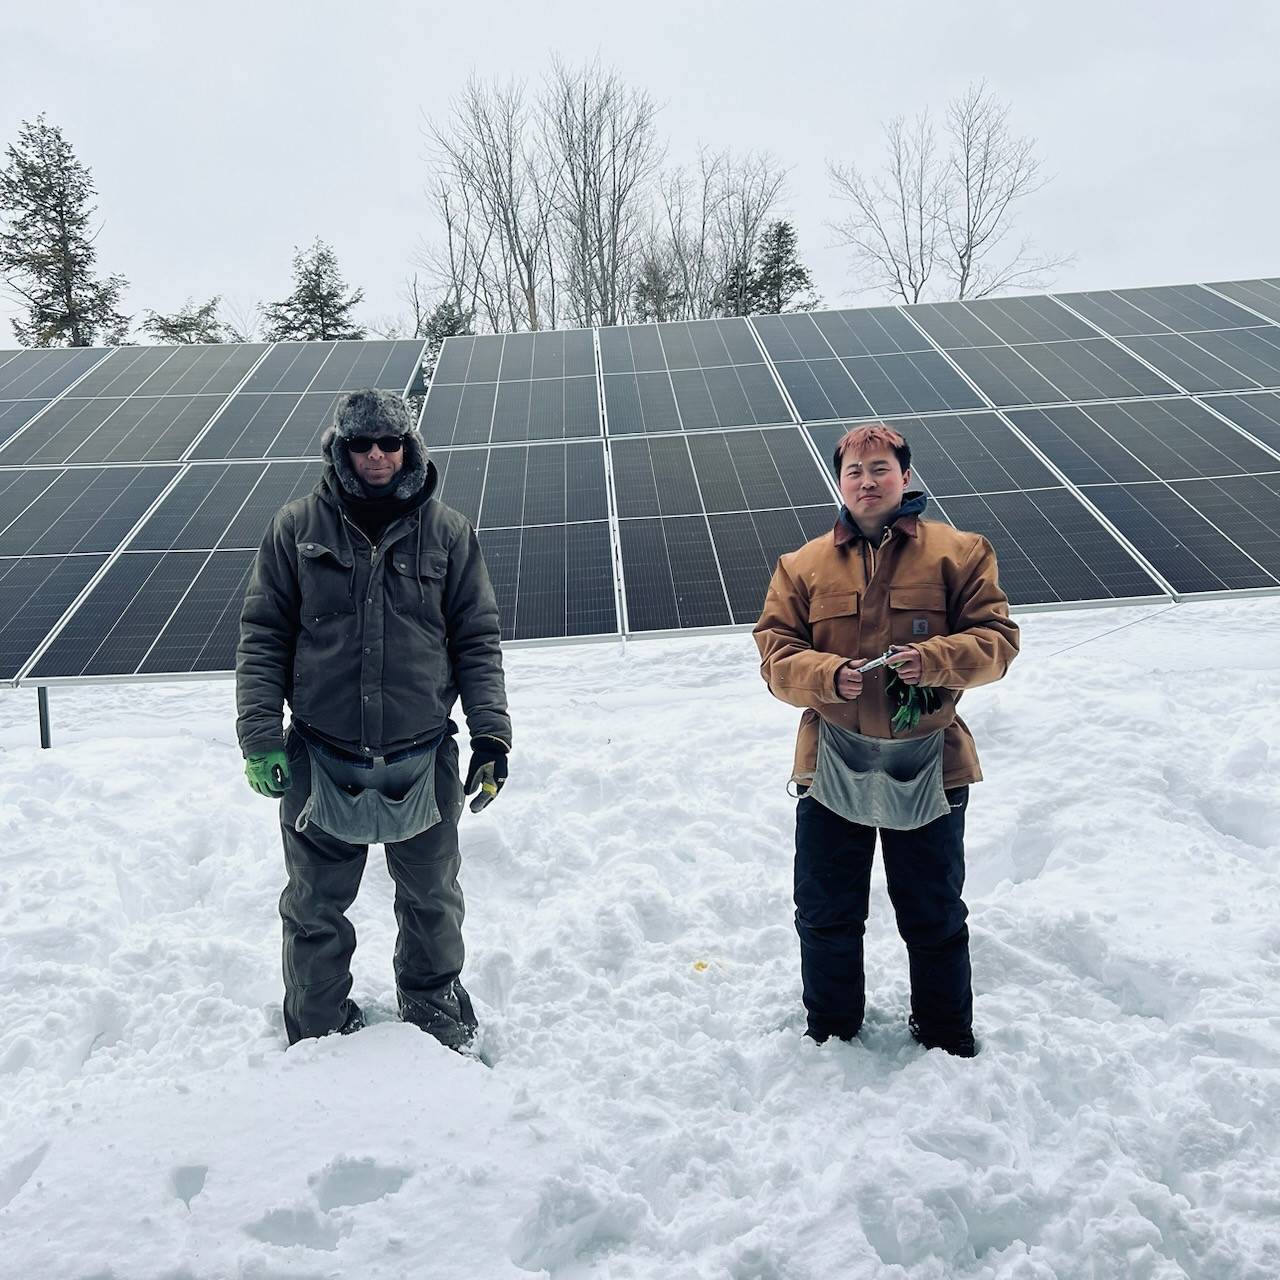 Skilled Trades Parnets tradesmen in snowy solar New England solar field